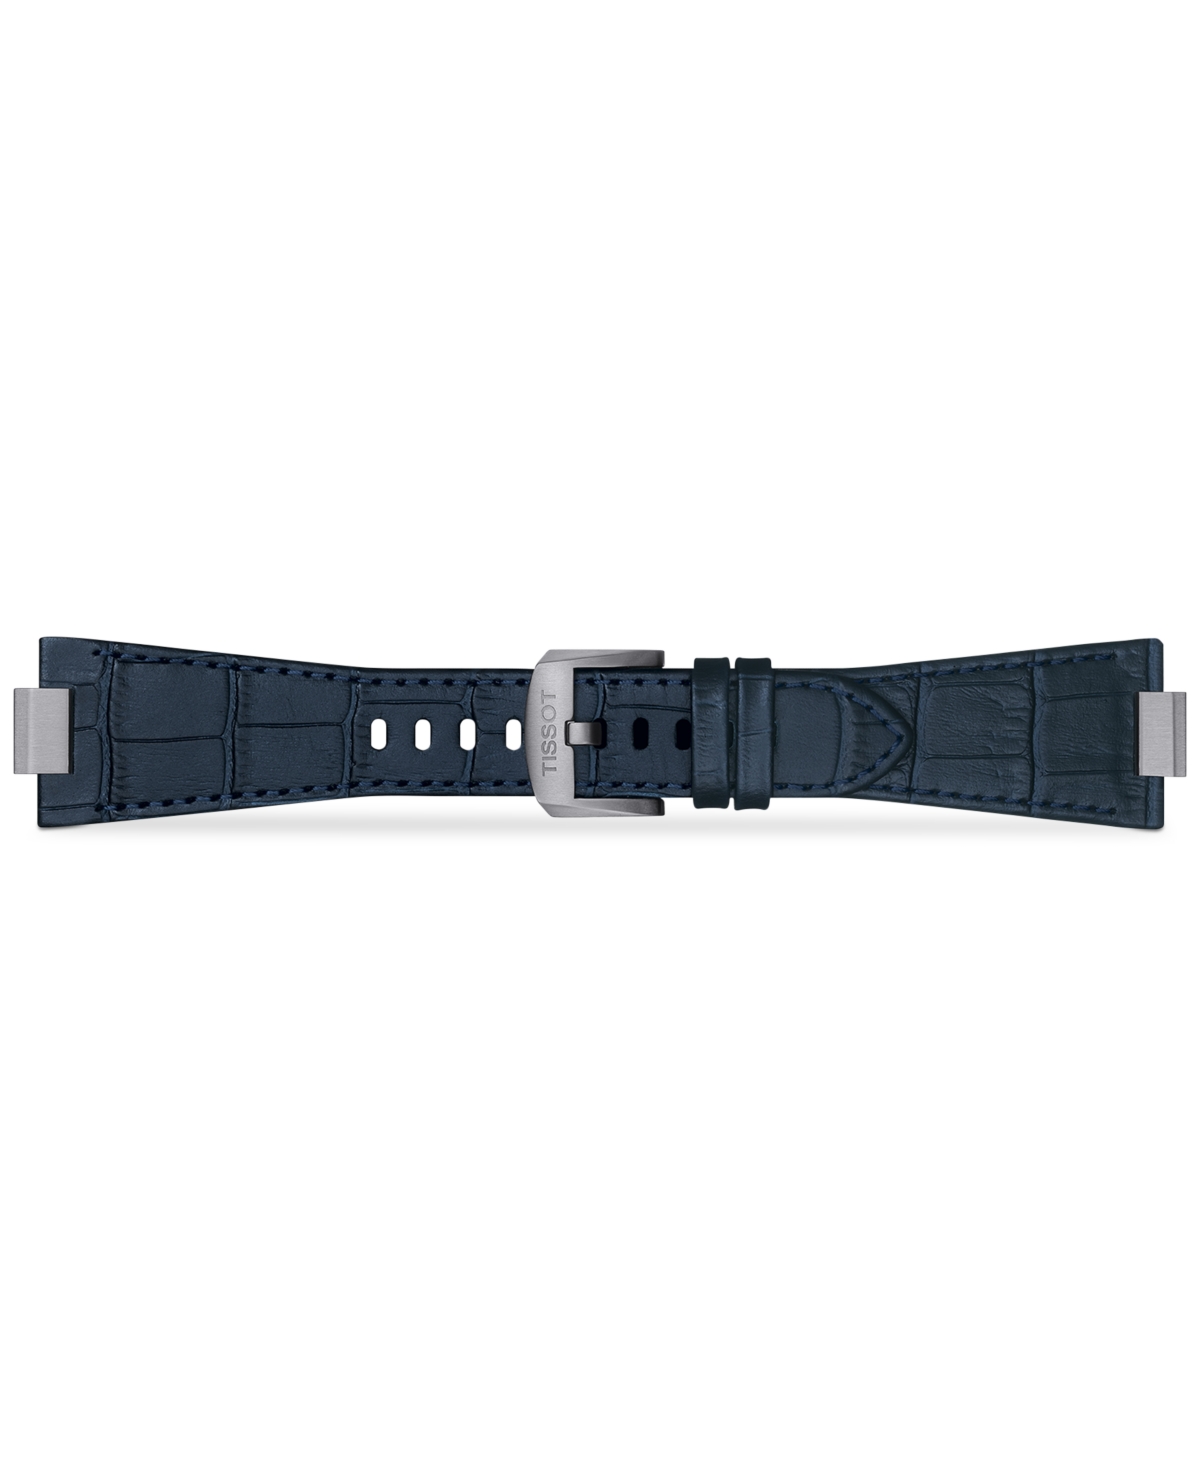 Shop Tissot Men's Swiss Automatic Prx Powermatic 80 Blue Leather Strap Watch 40mm